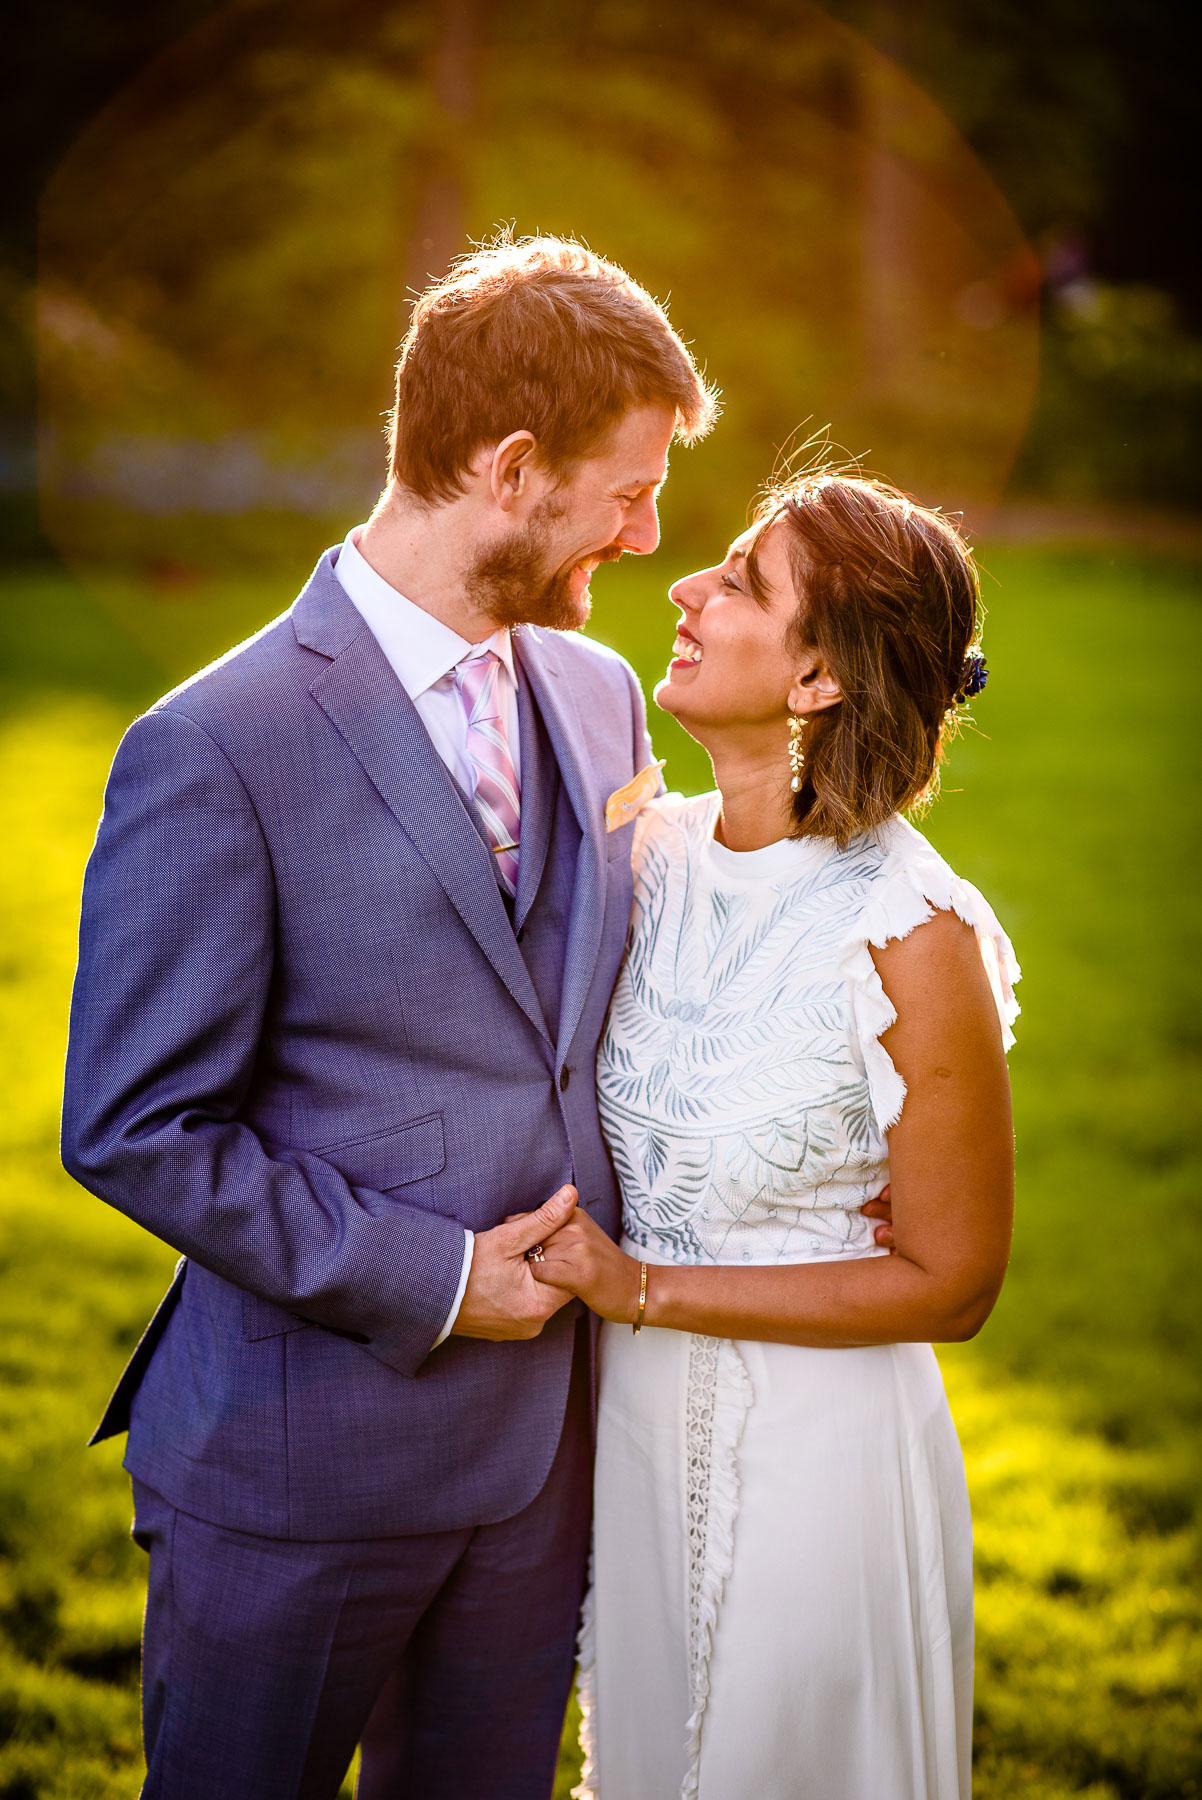 Central Park NYC Wedding bride and groom portrait sun backlight